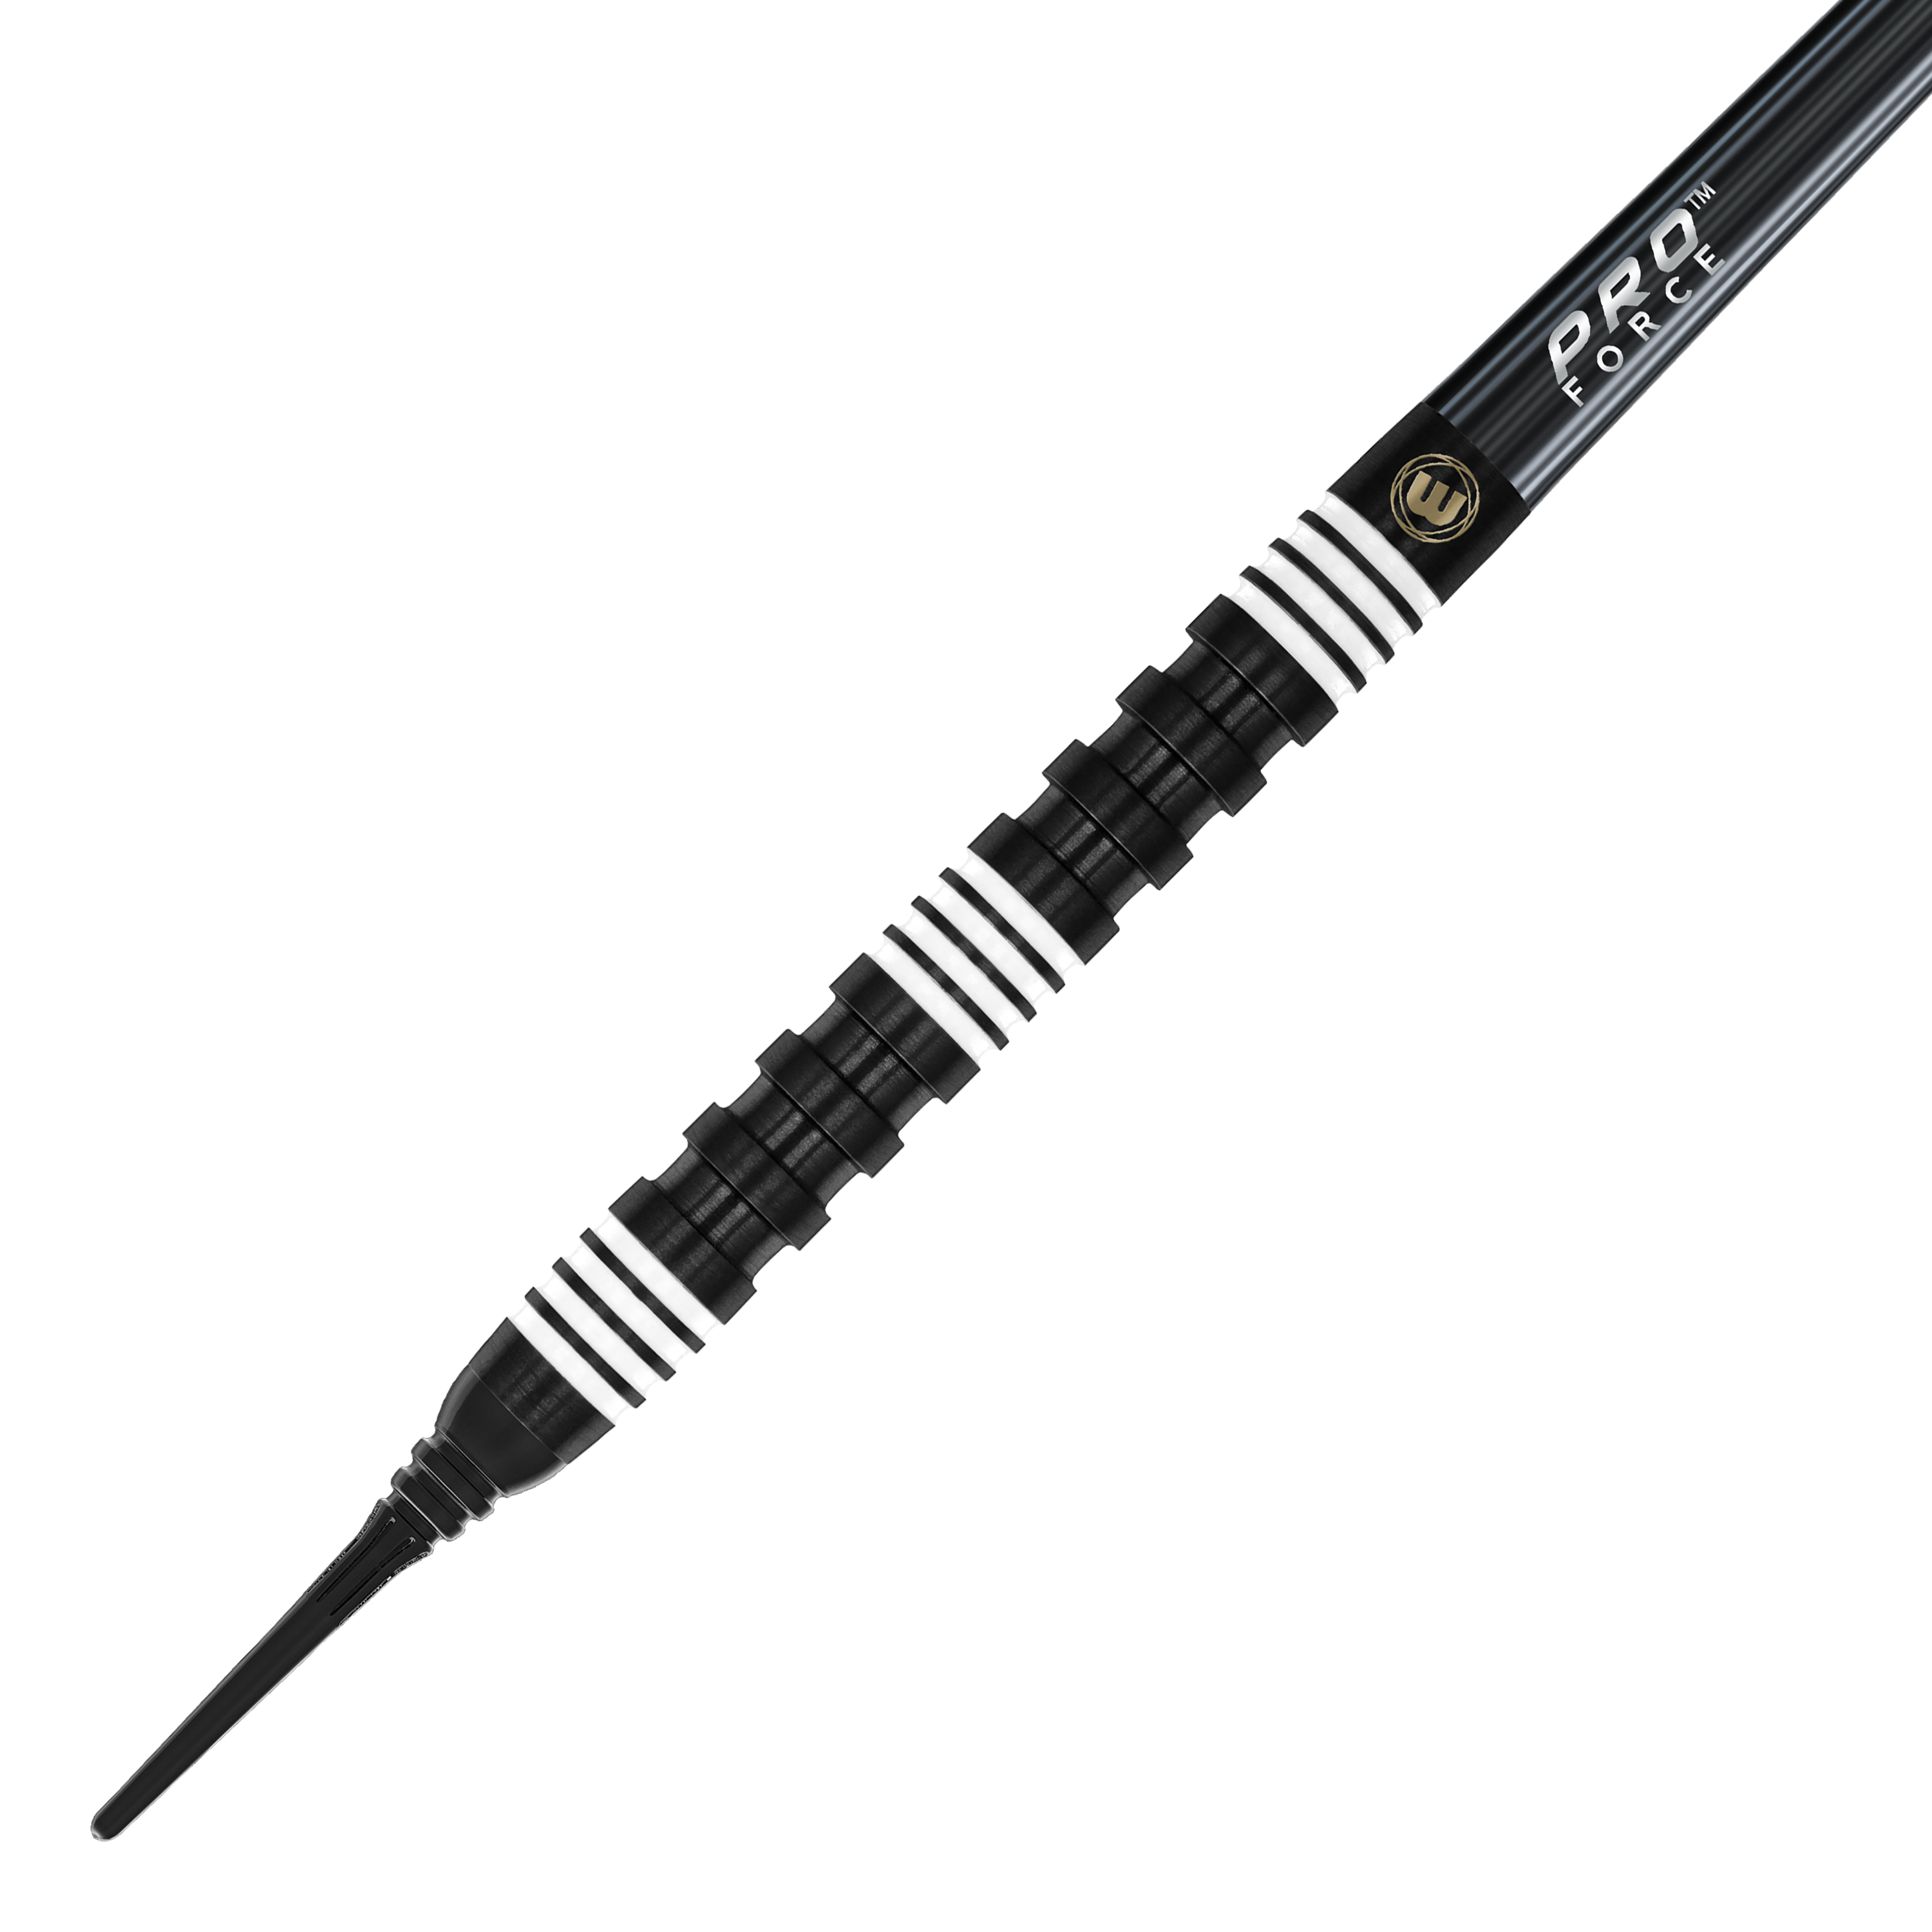 Winmau Danny Noppert 85 Pro-Series soft darts - 20g